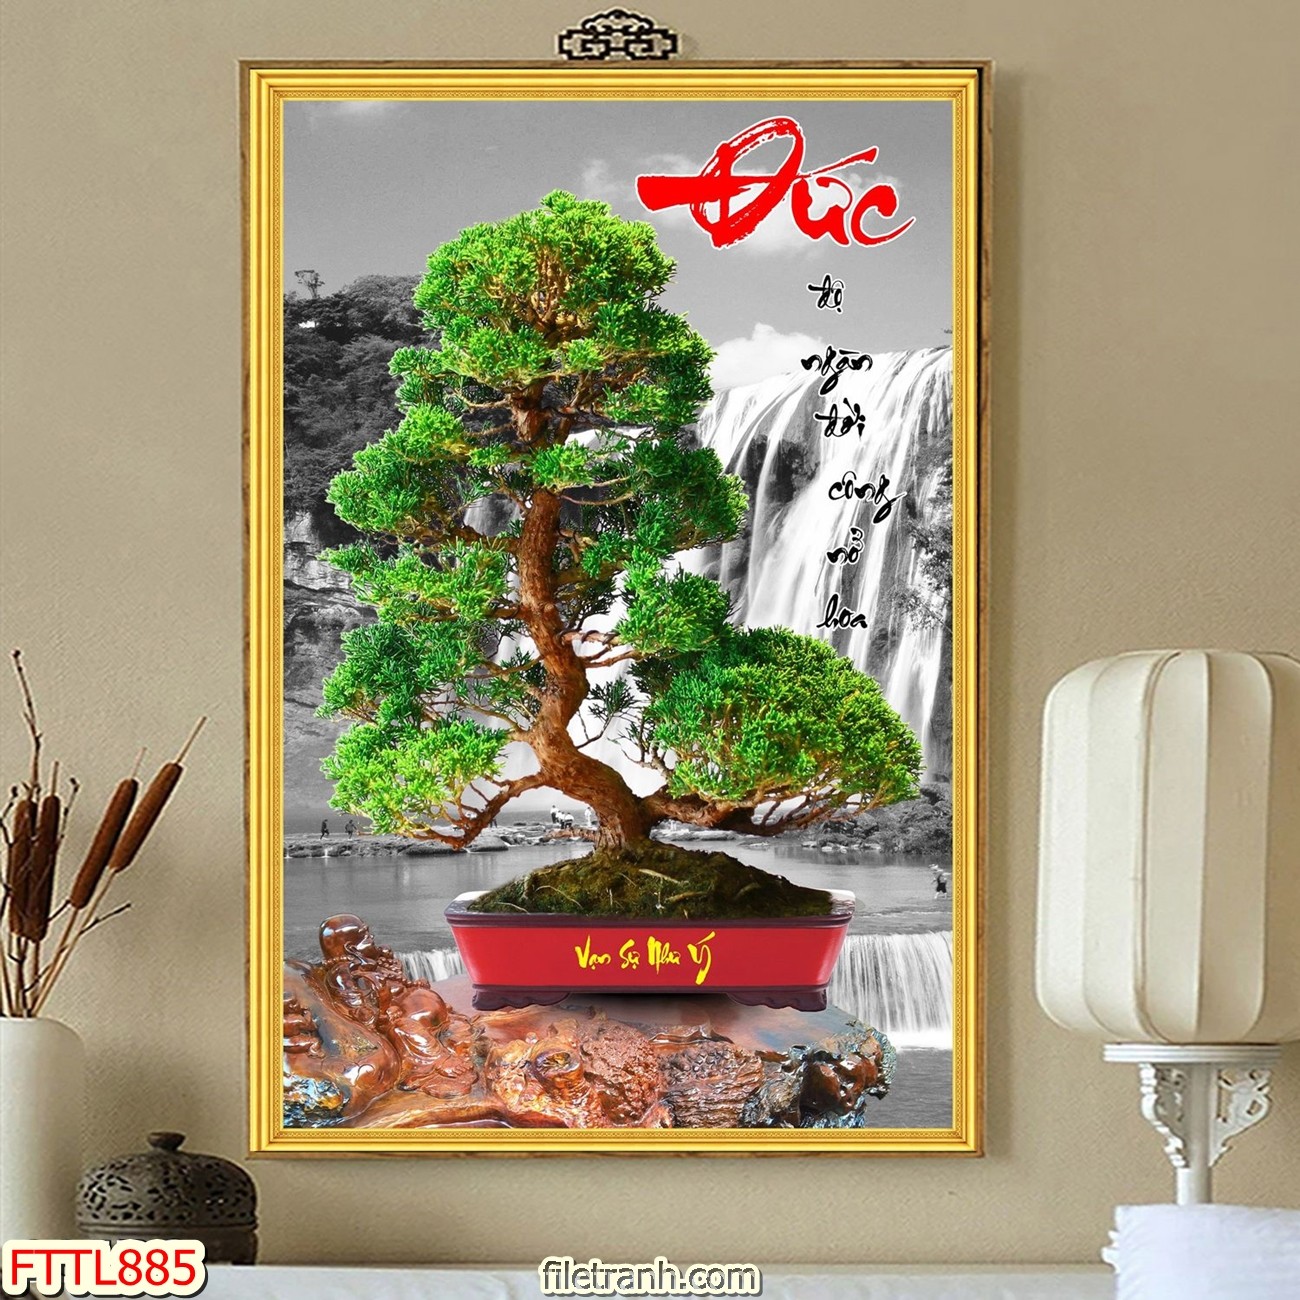 http://filetranh.com/file-tranh-chau-mai-bonsai/file-tranh-chau-mai-bonsai-fttl885.html